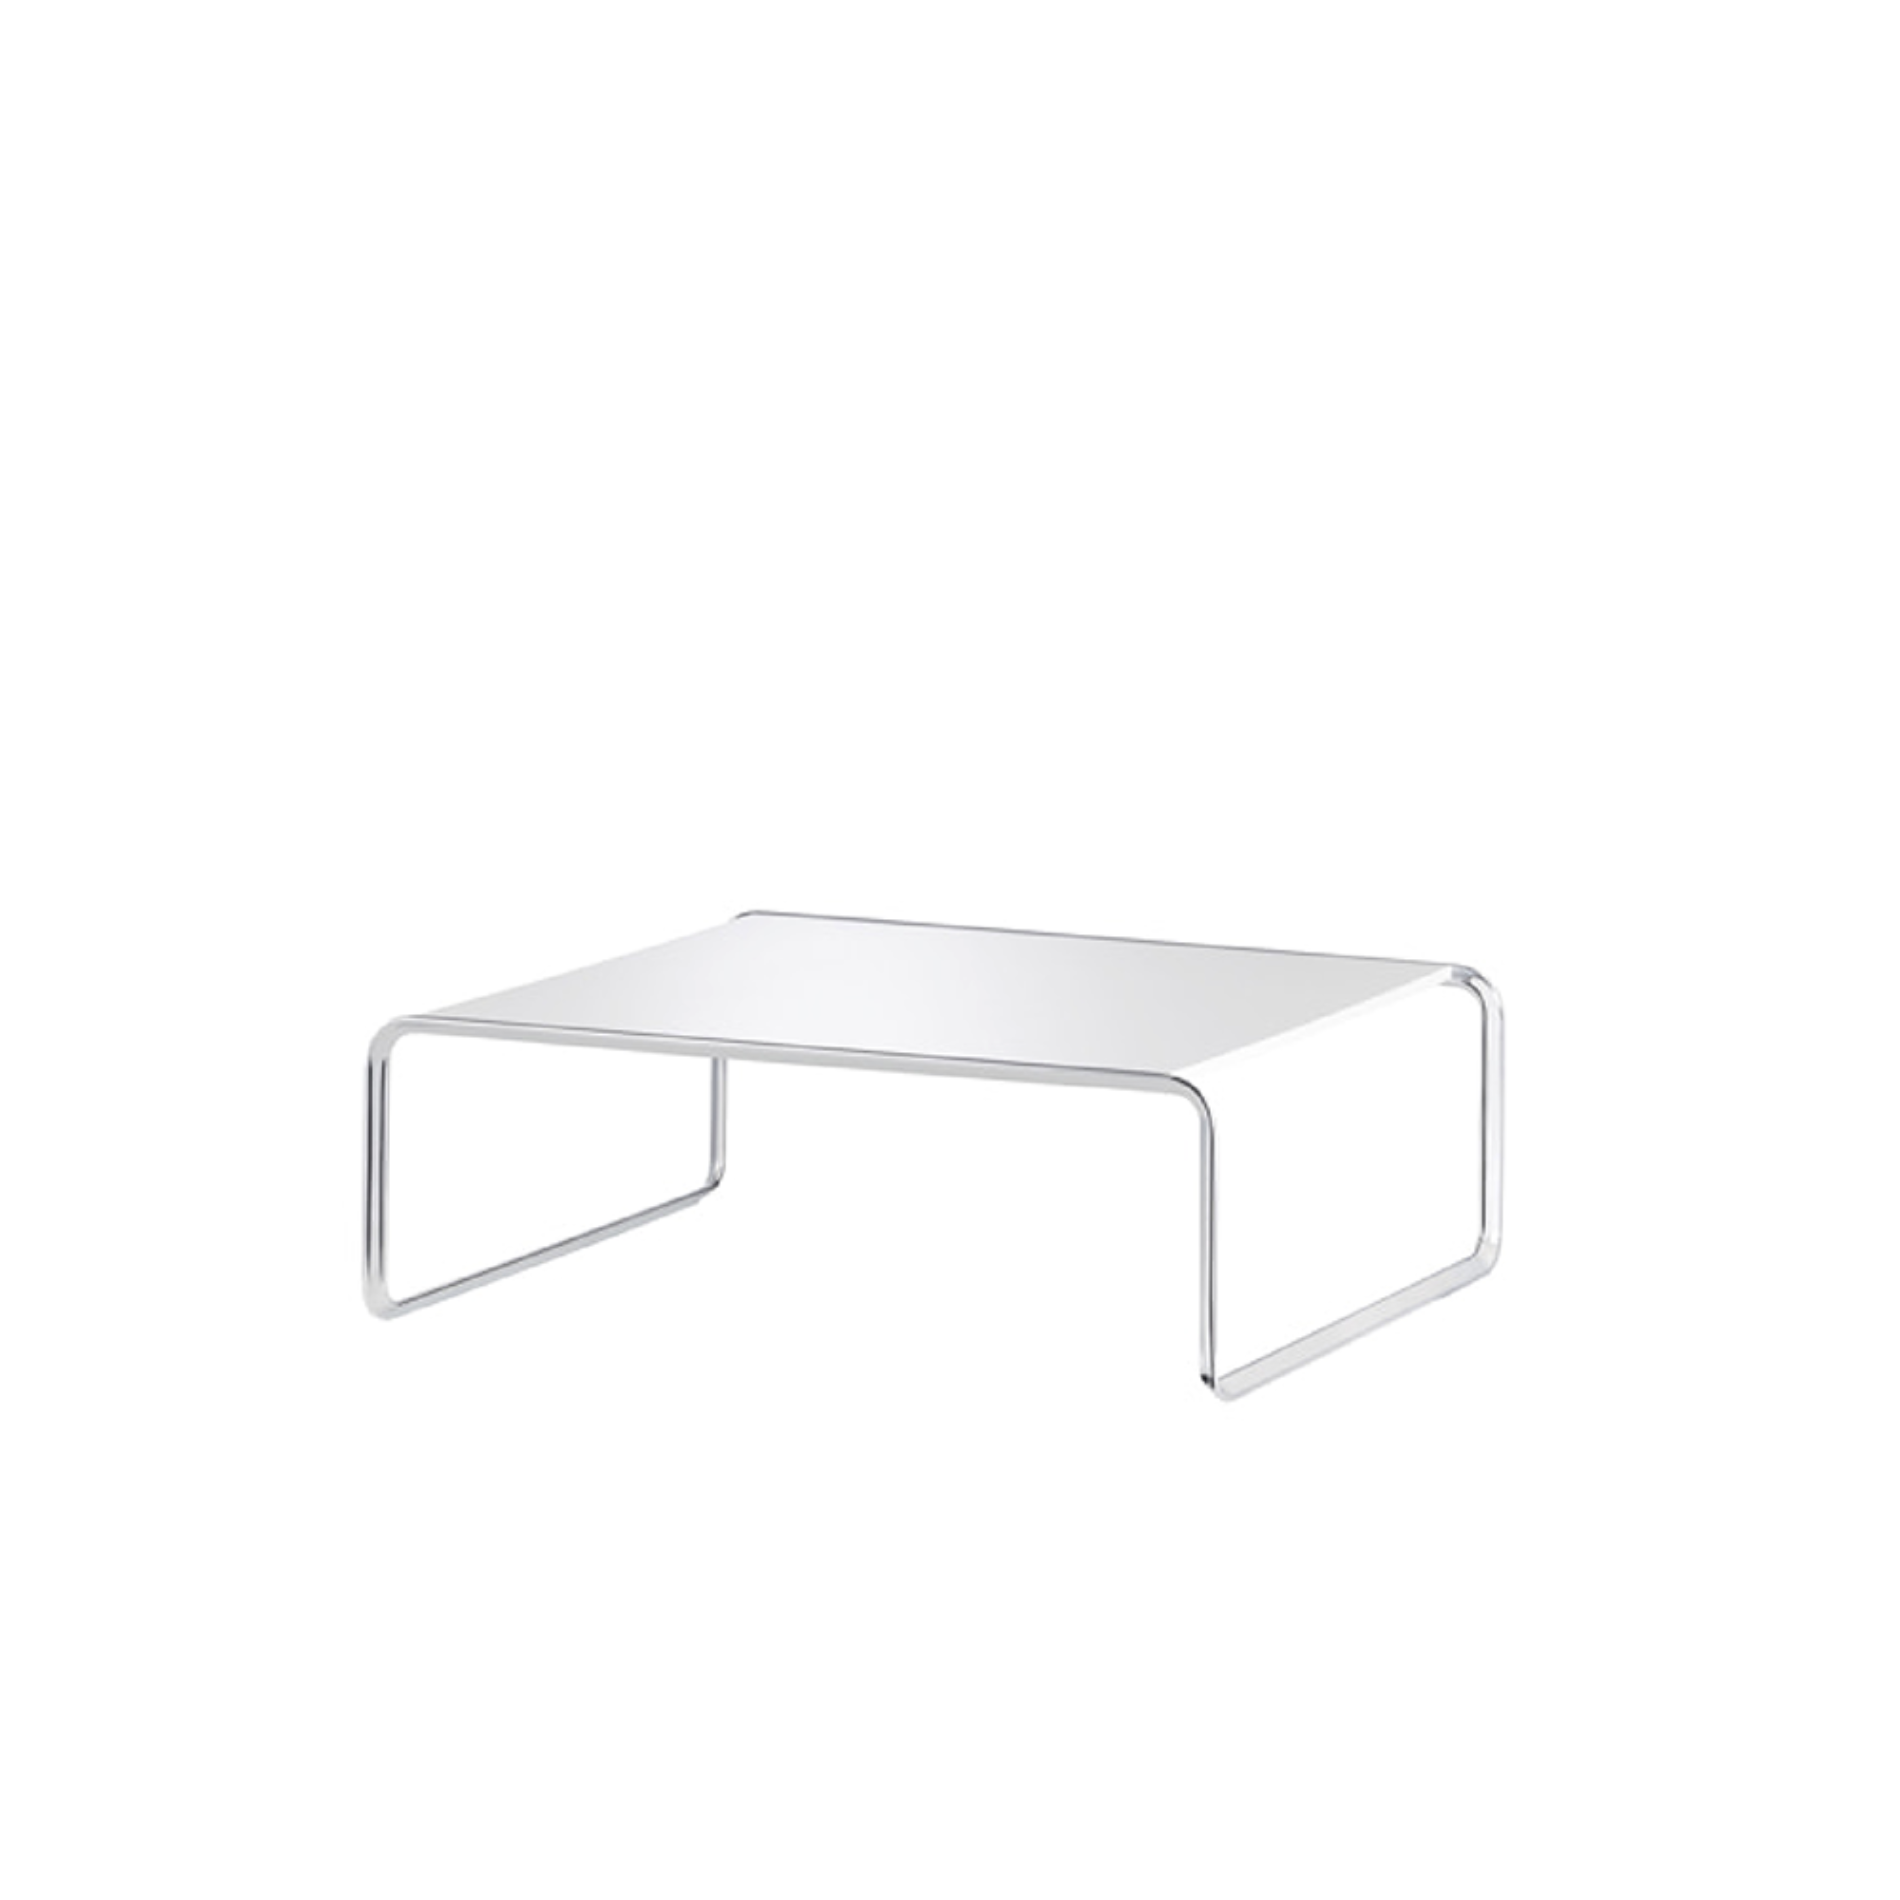 TECTA K1A Oblique Couch Table - White 79Cm